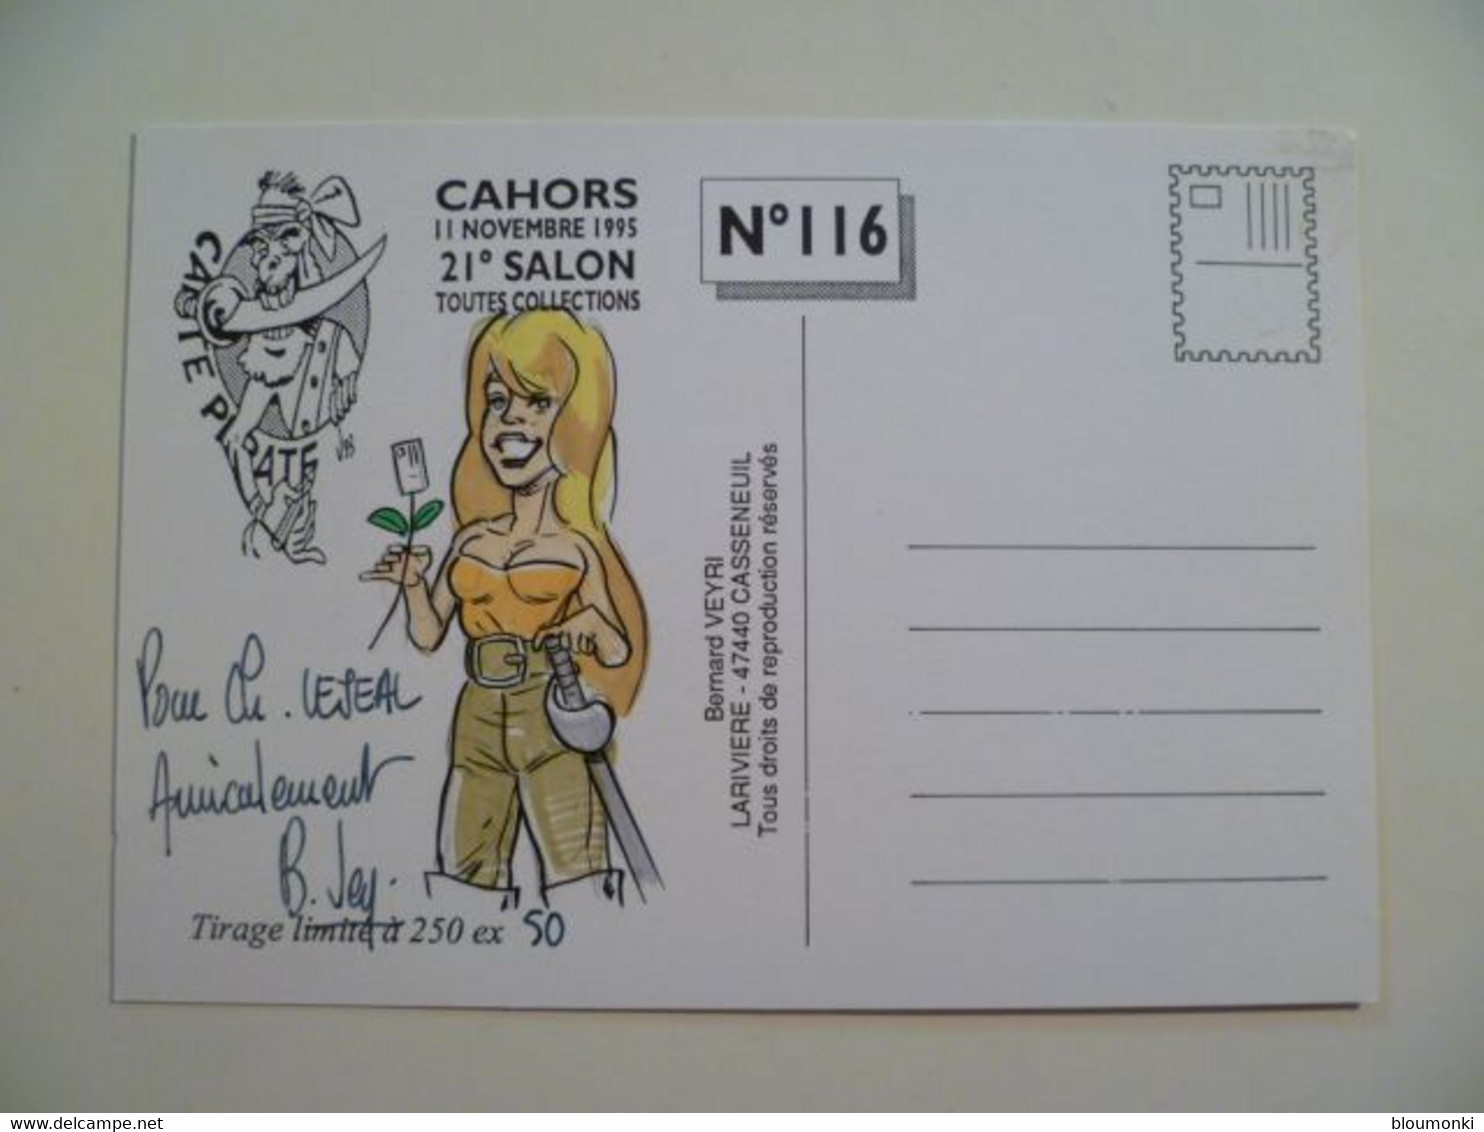 Carte Postale Illustrateur Bernard VEYRI / Dessin Unique Dédicace Ch Lejeal /  CAHORS Carte Pirate 1995 - Veyri, Bernard